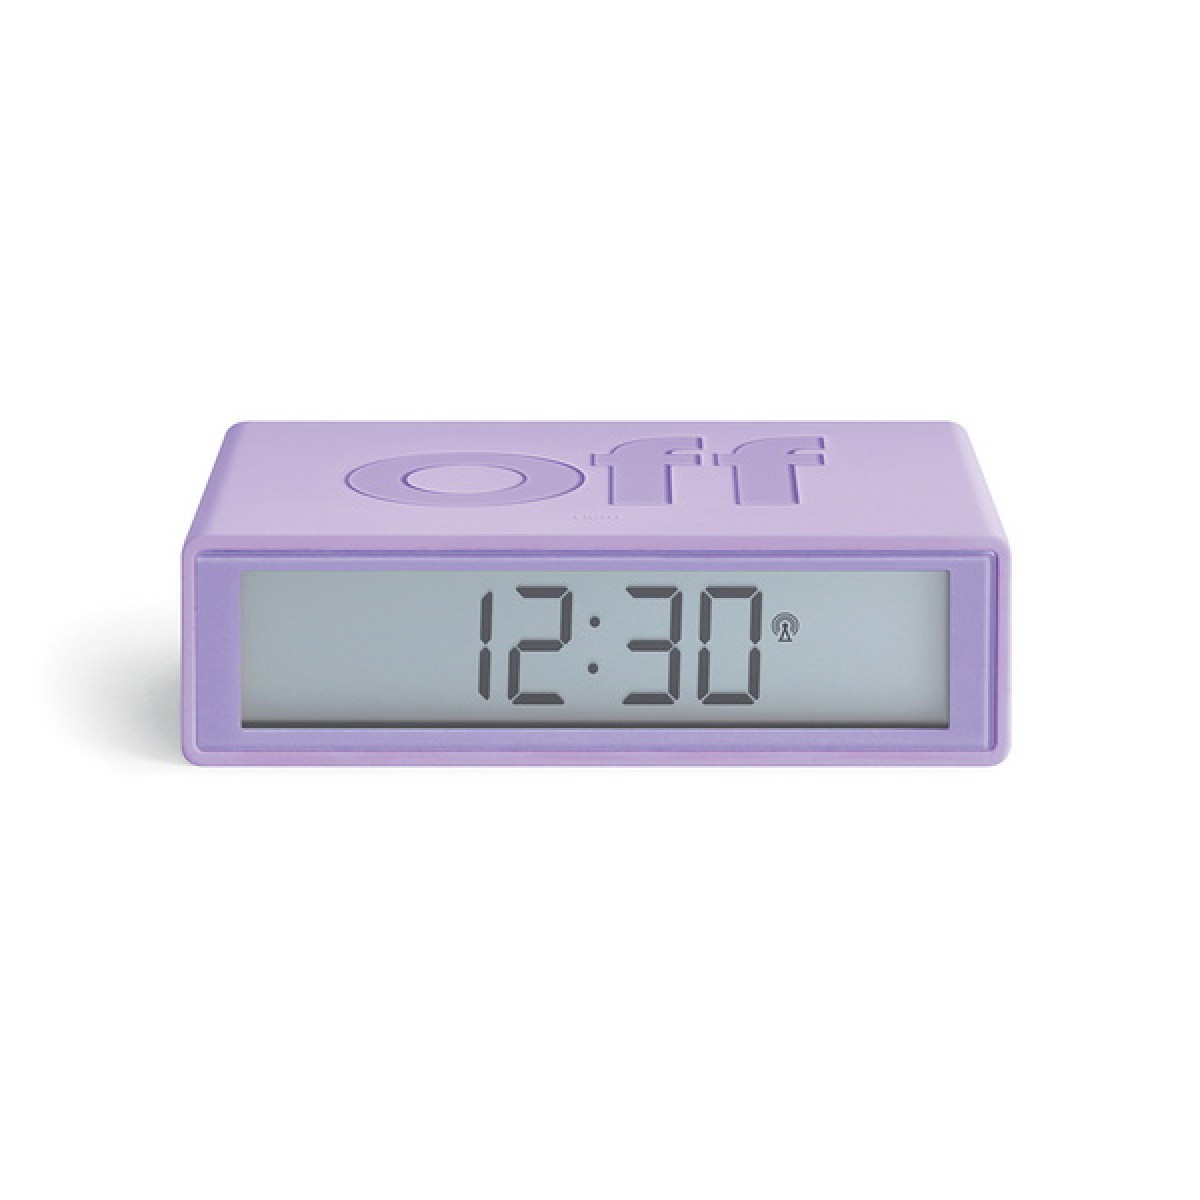 Lexon - Flip - Reversible LCD alarm clock - Light Lilac